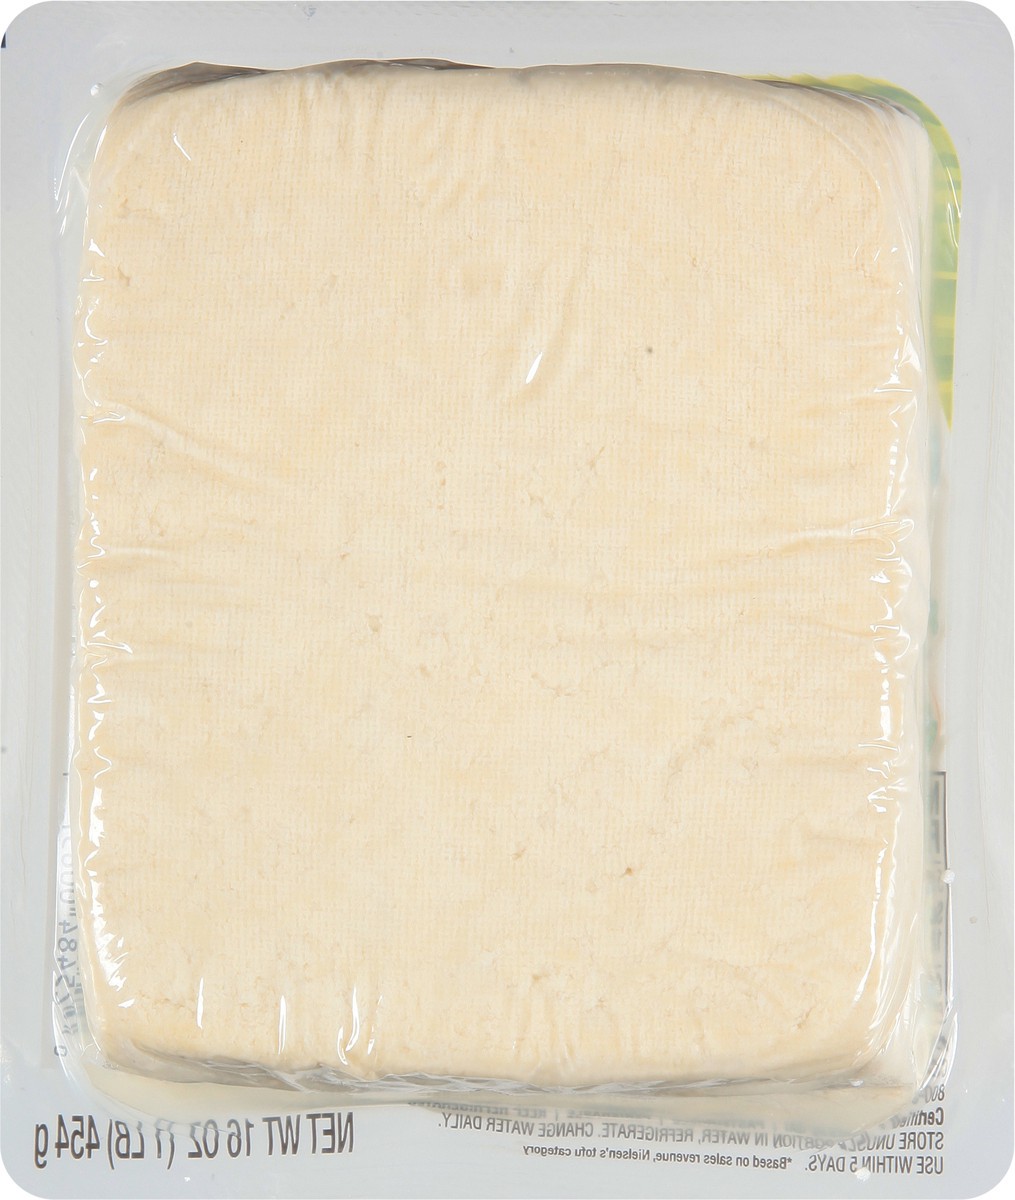 slide 2 of 9, Nasoya Super Firm Organic Tofu 16 oz, 1 ct